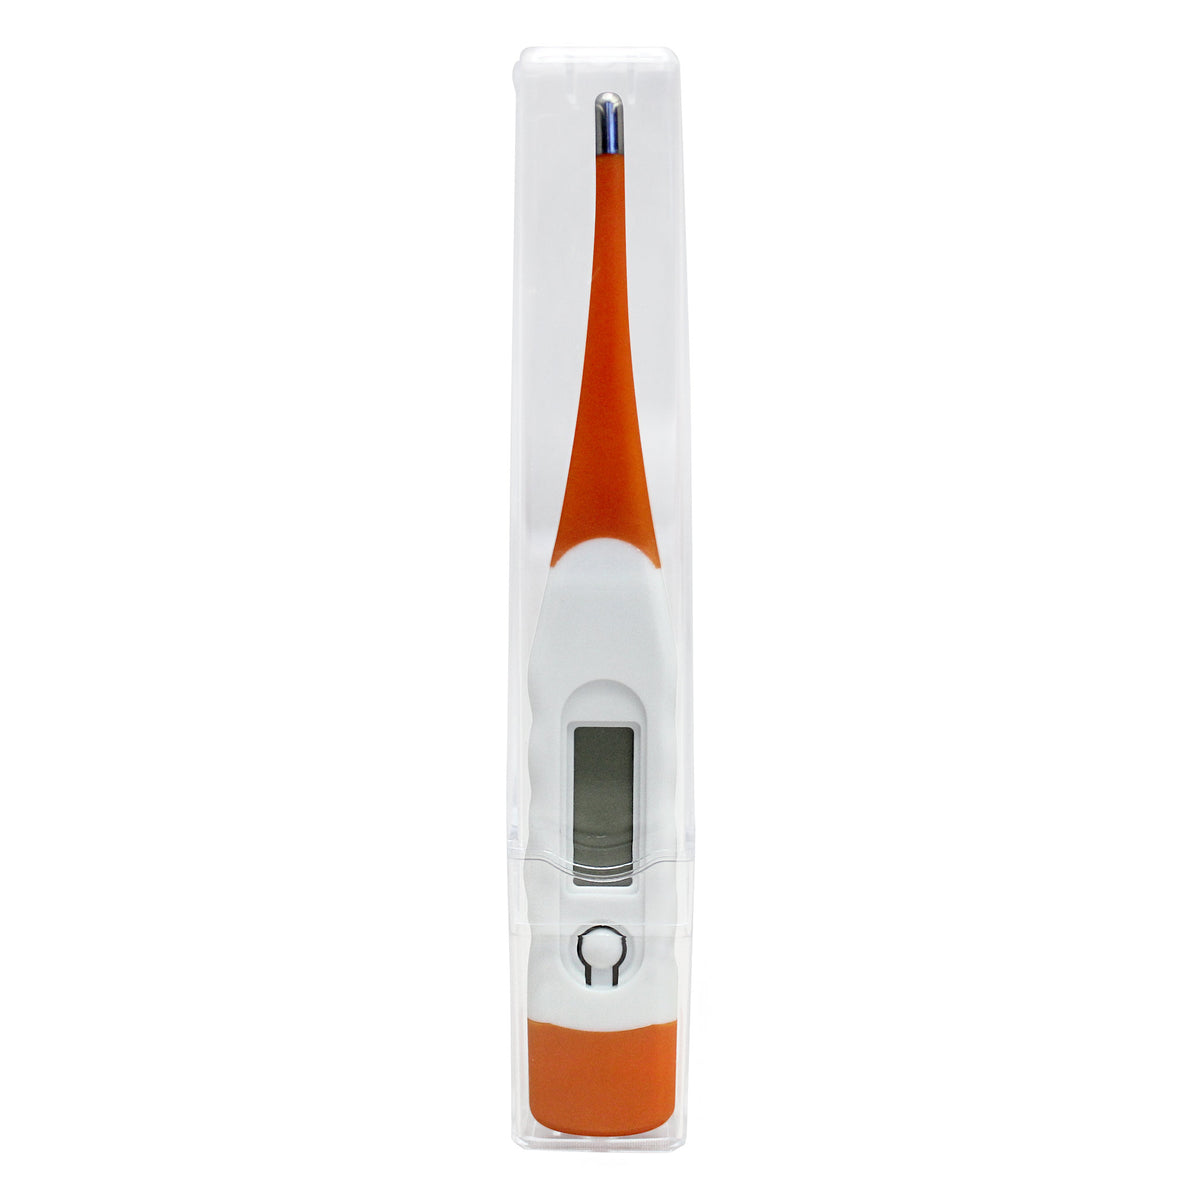 Genial Flexible Tip Digital Thermometer